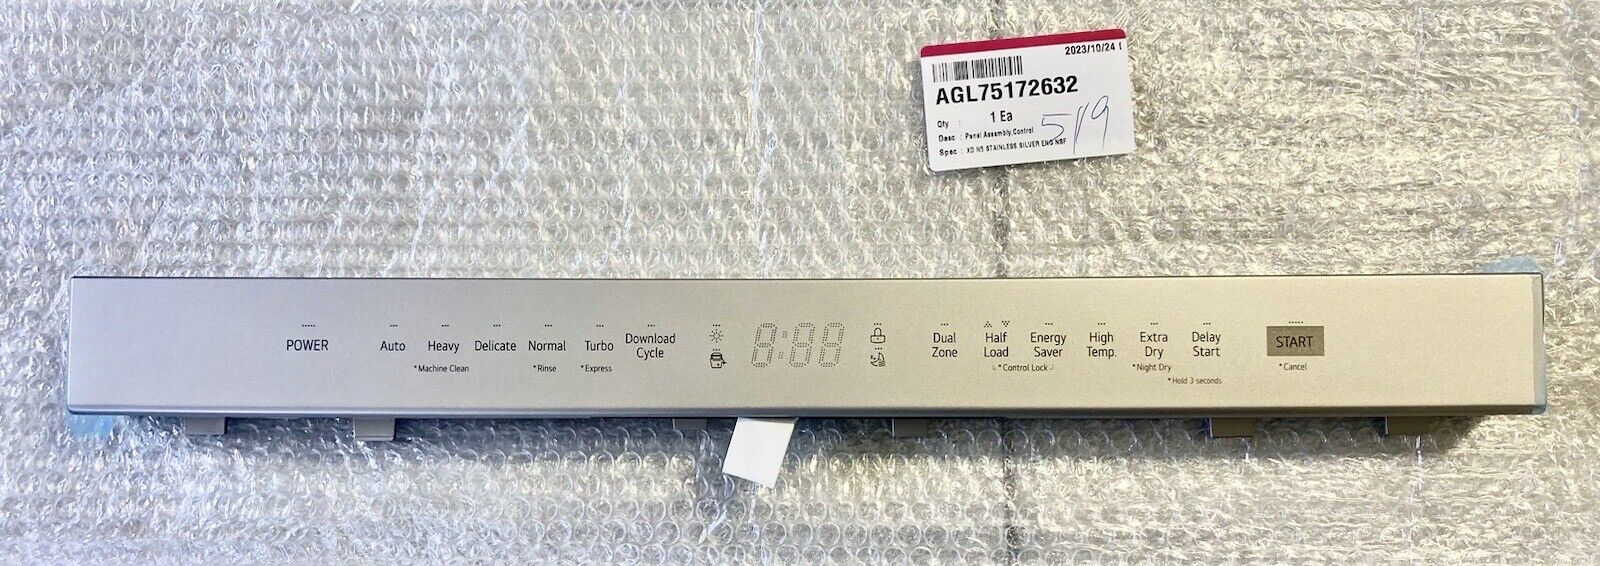 LG Dishwasher Control Panel AGL75172632